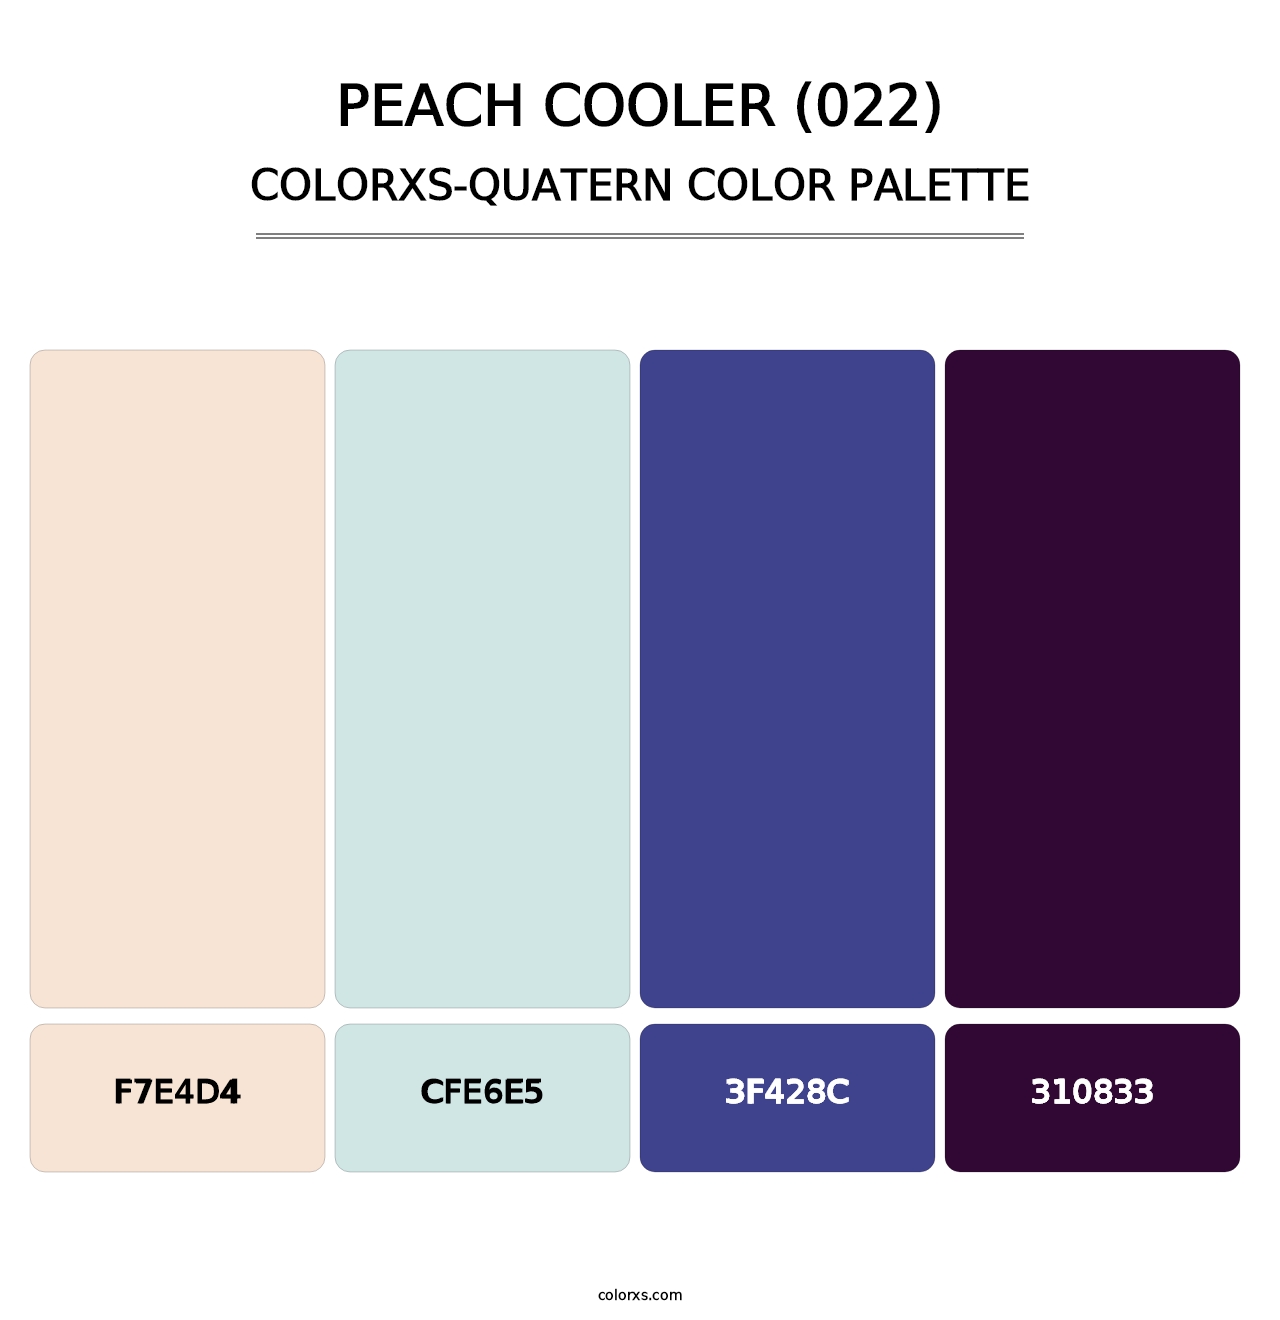 Peach Cooler (022) - Colorxs Quatern Palette